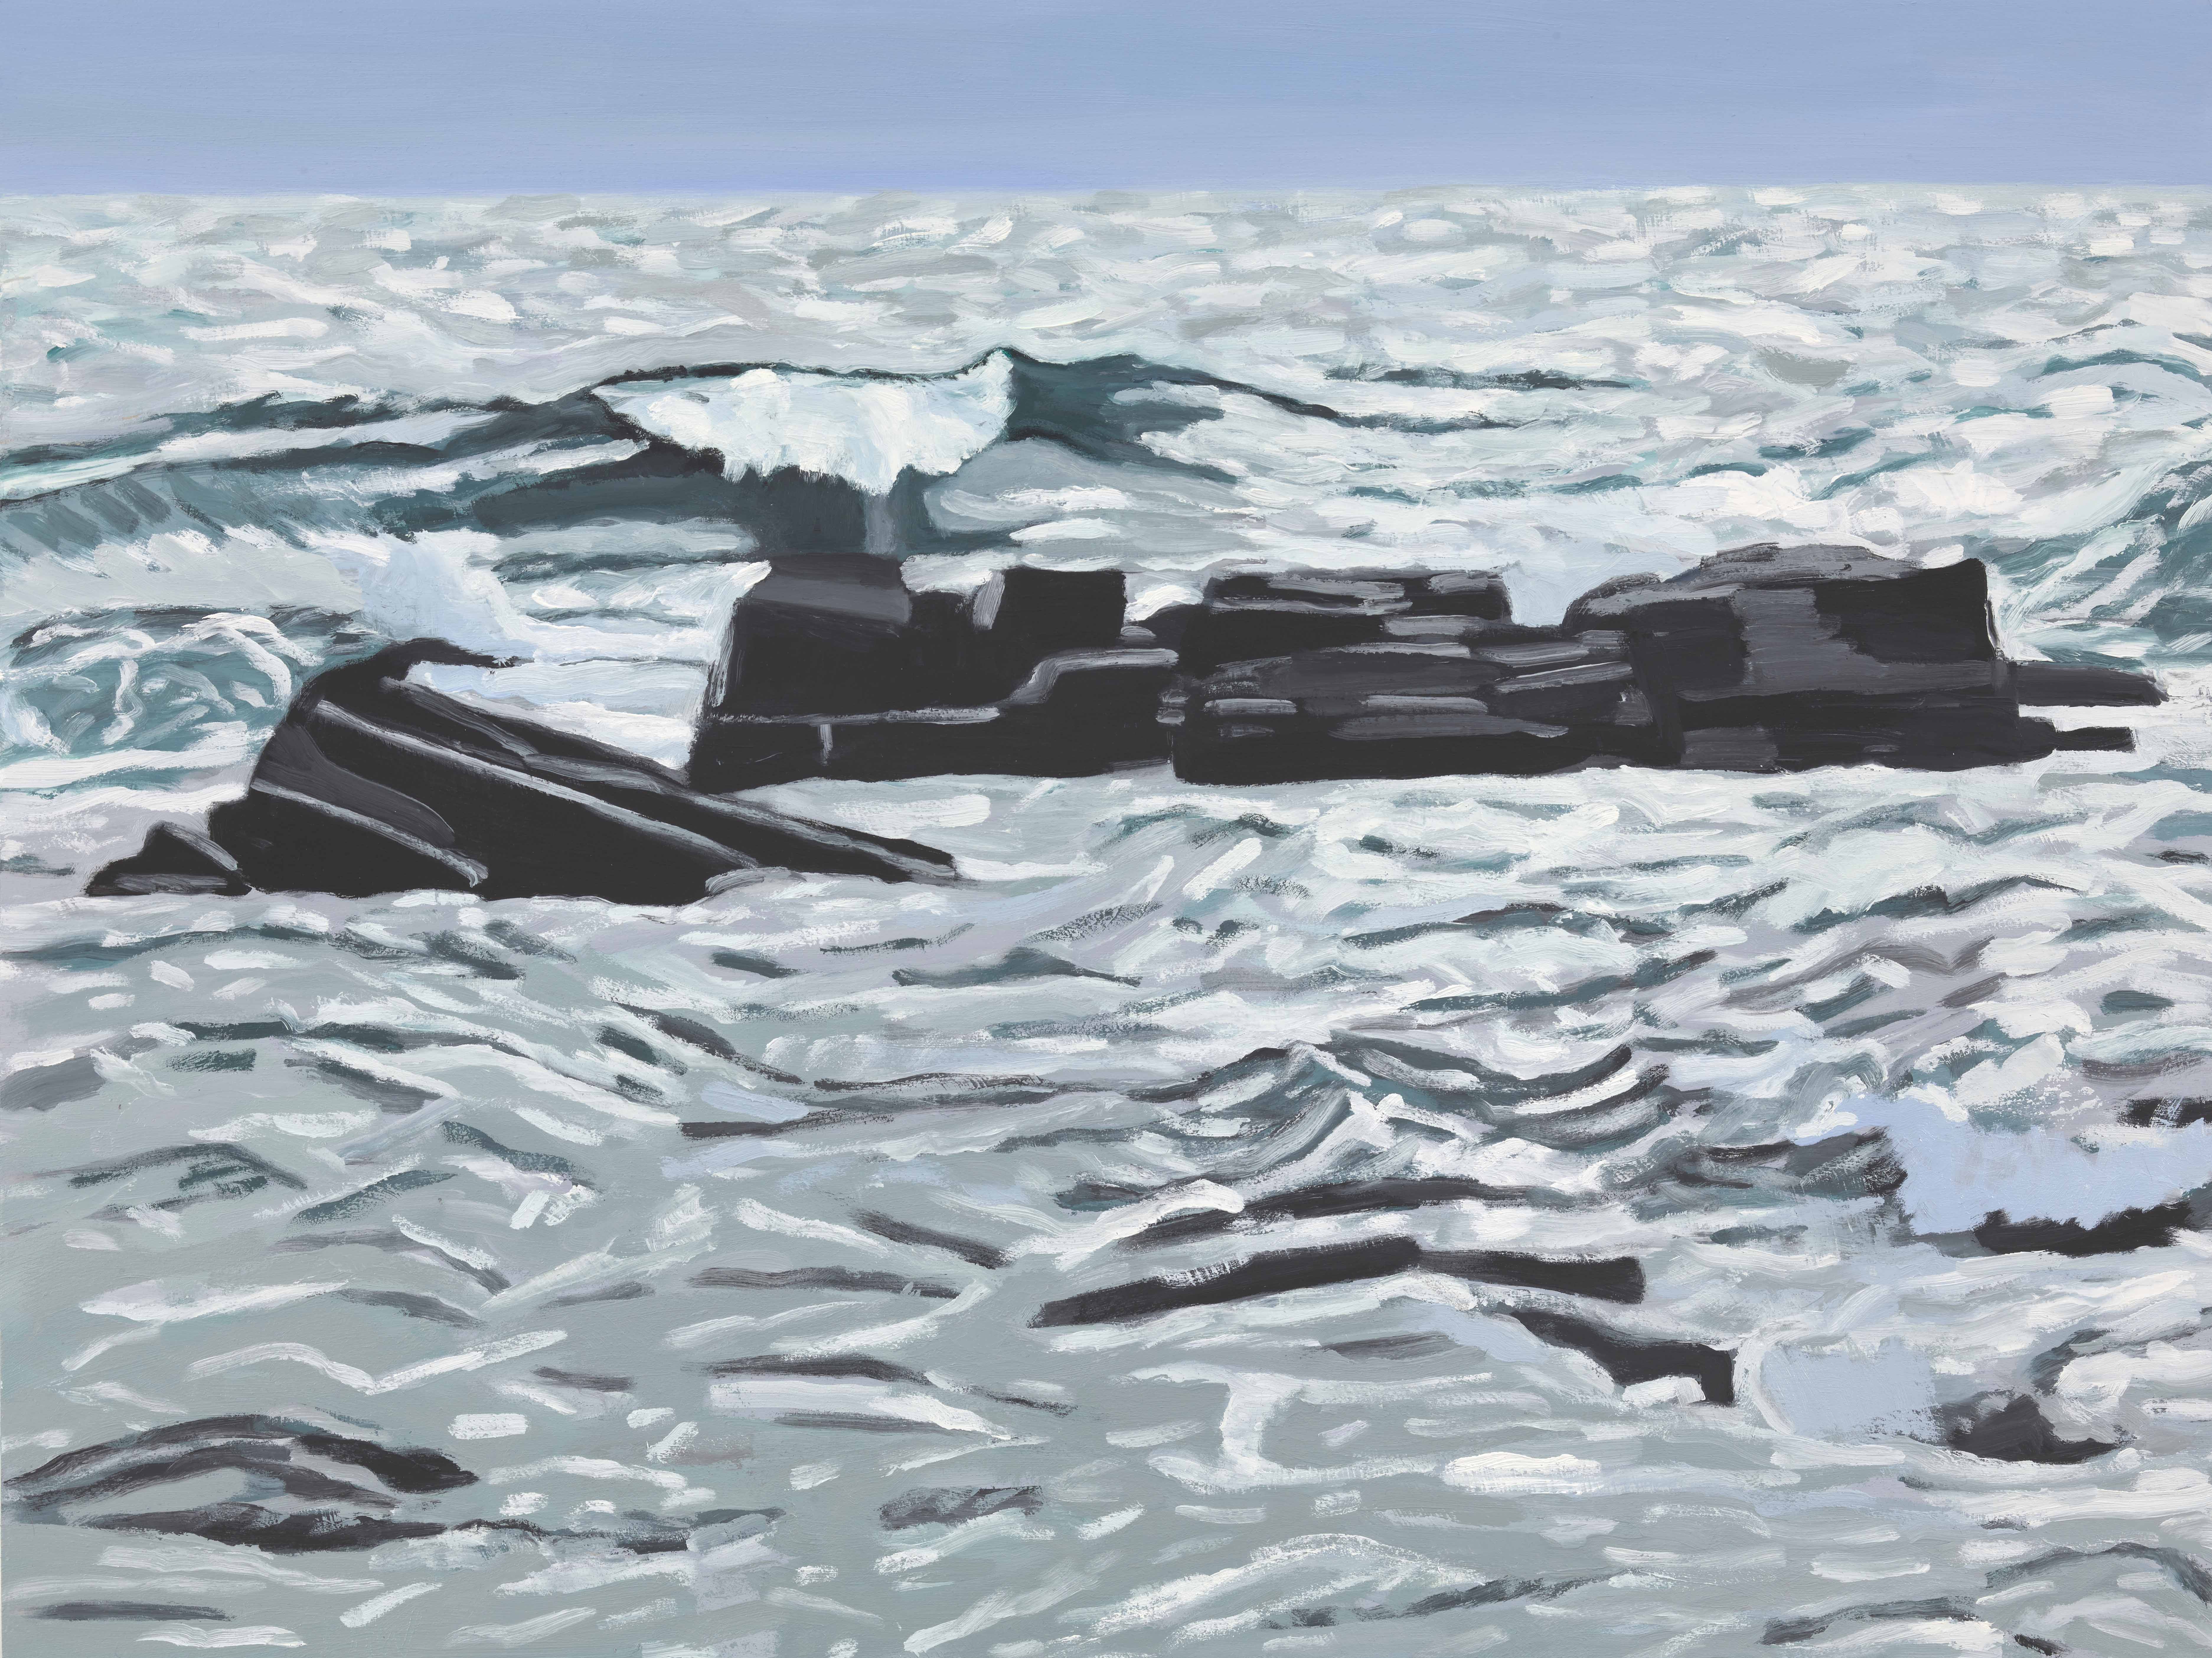 Winter Sea, 2019, oil on panel, 18 x 24 inches